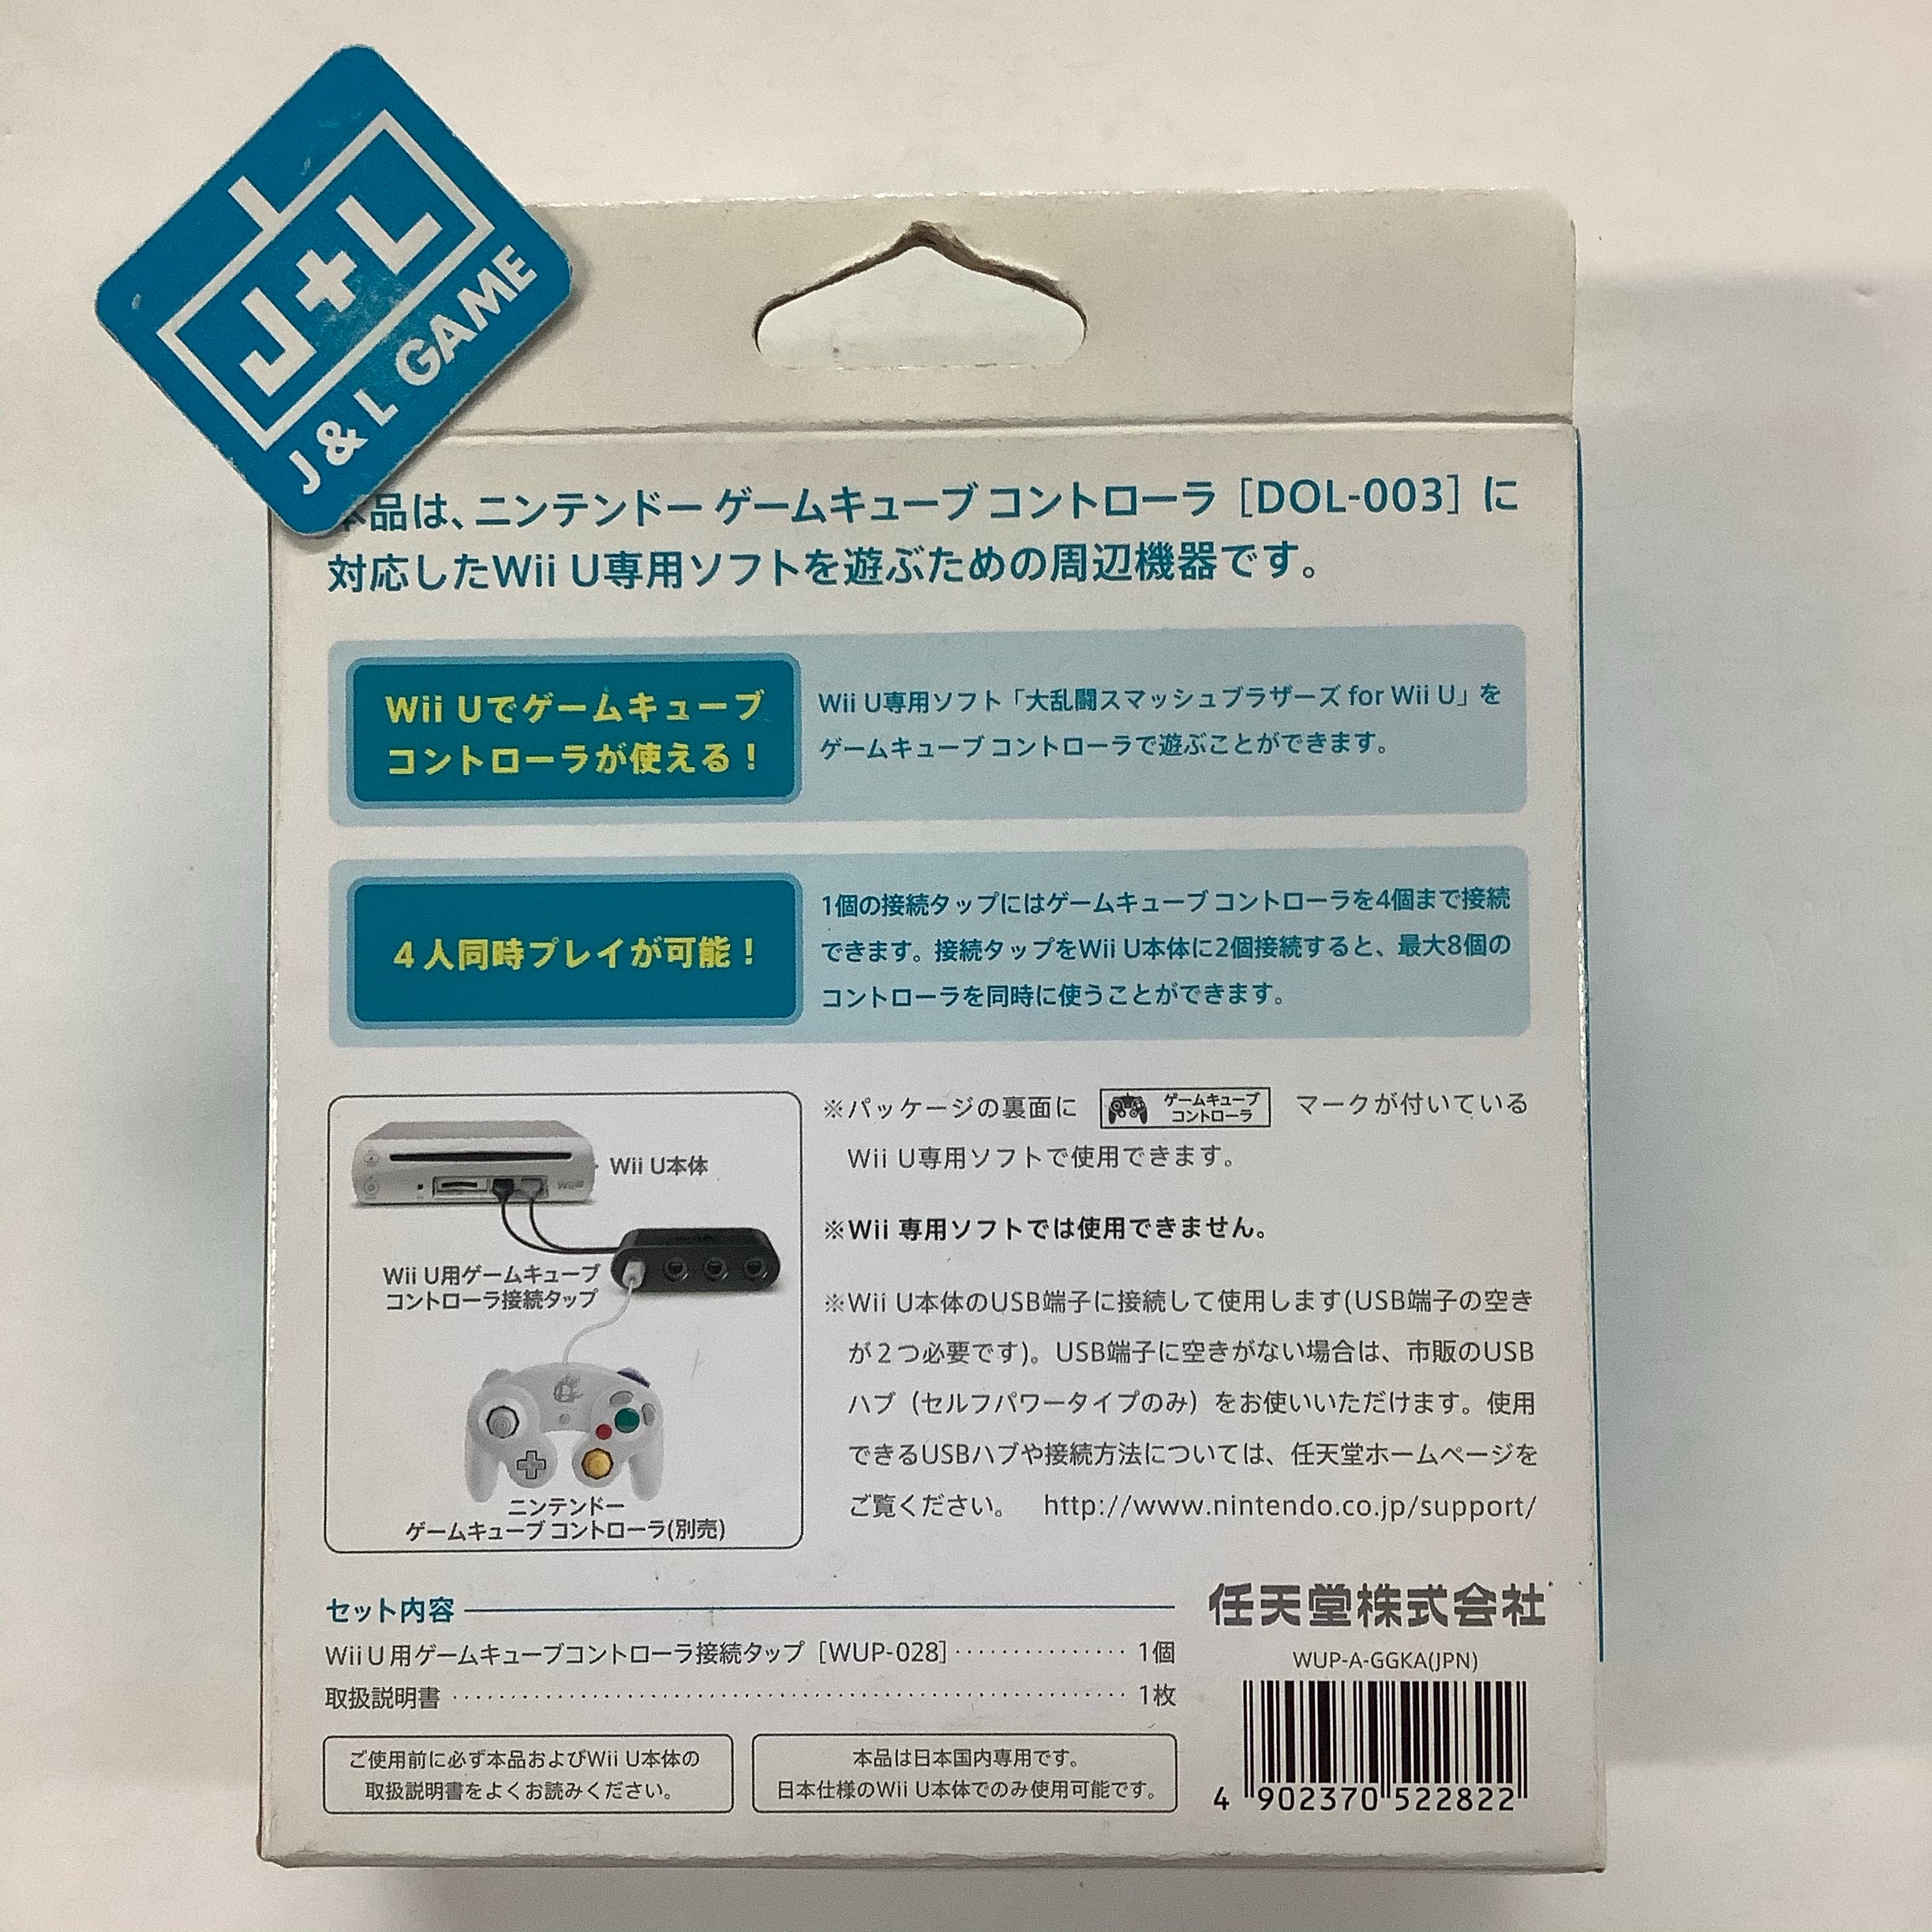 Nintendo Wii U Super Smash Bros. GameCube Adapter - Nintendo Wii U ( Japanese Import ) Accessories Nintendo   